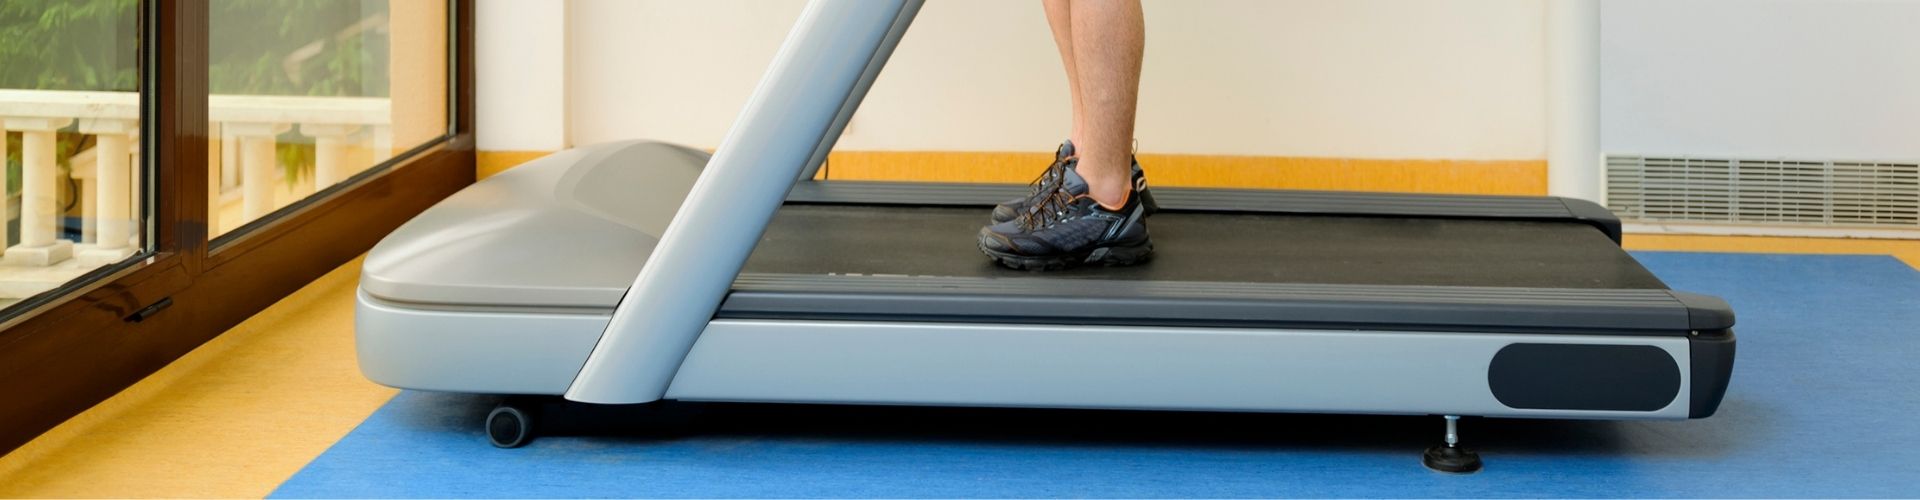 treadmill noise reduction mat